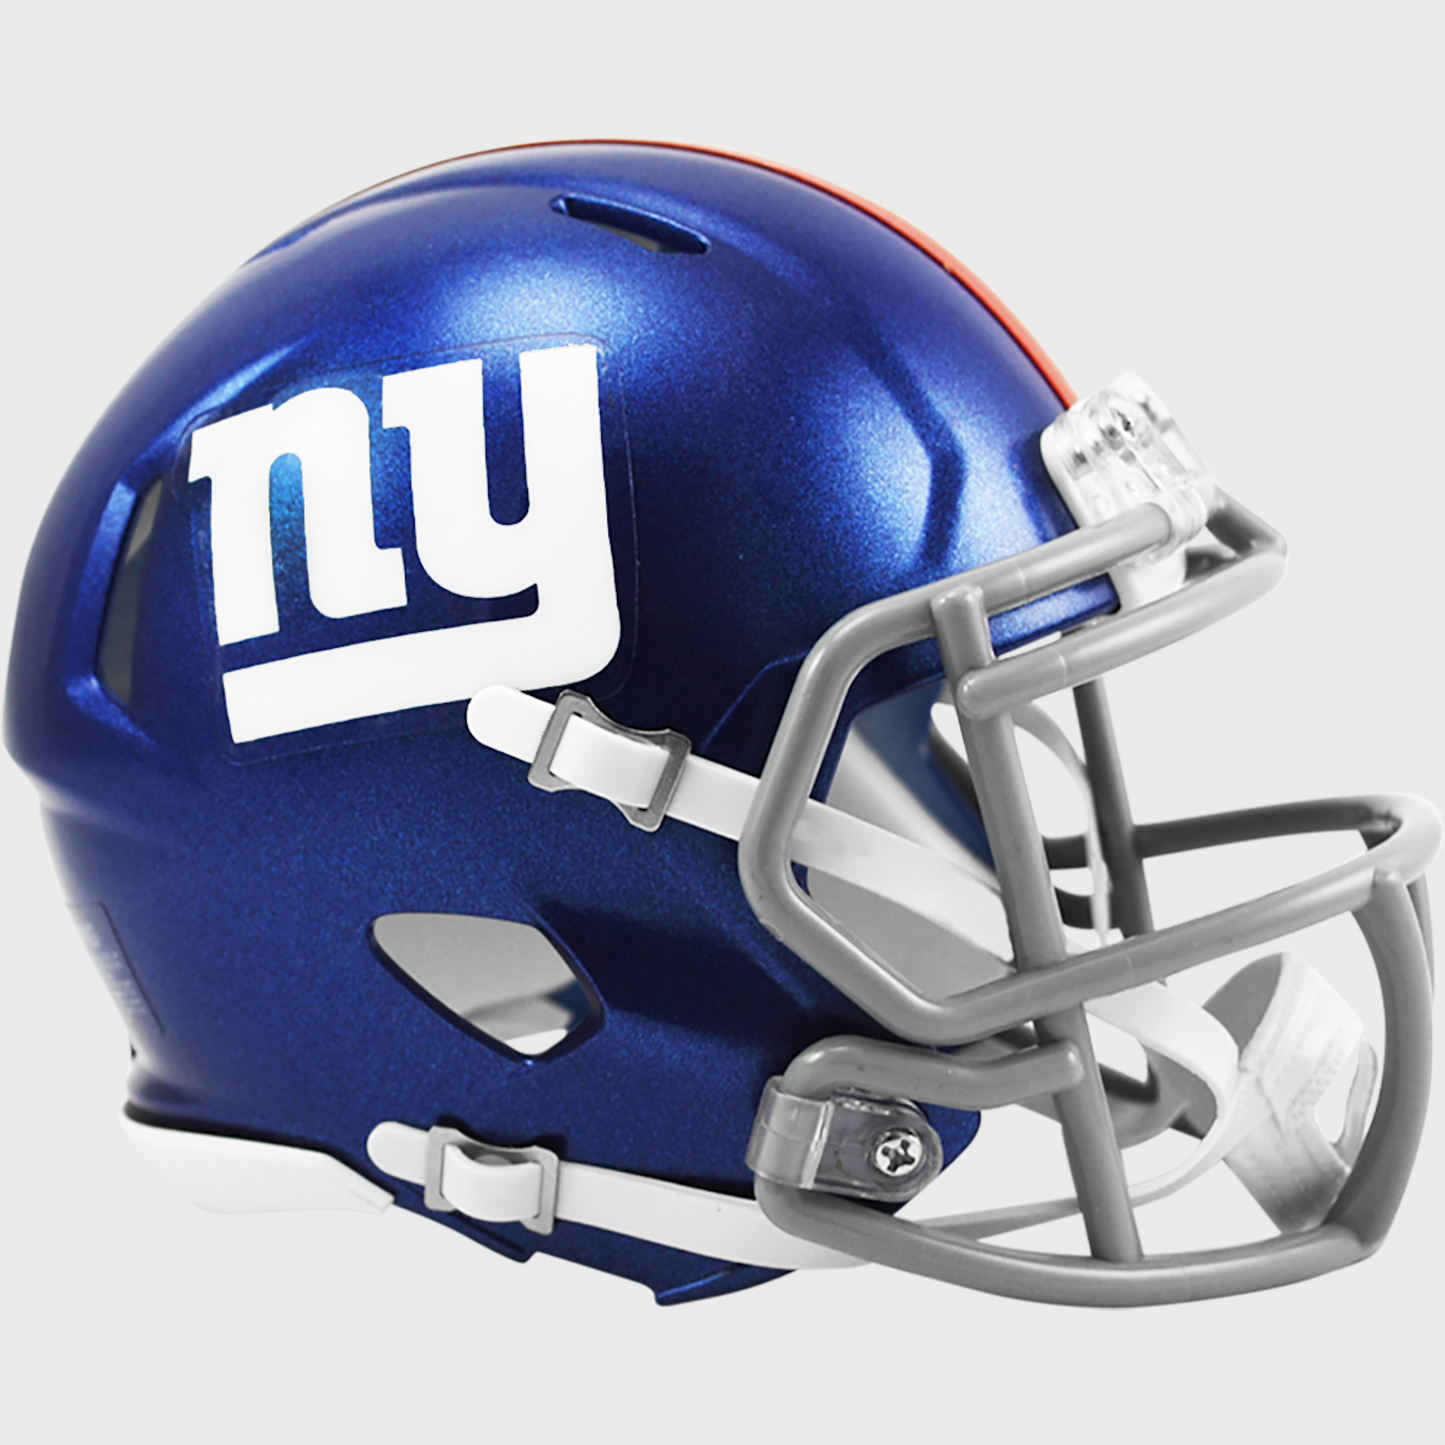 New York Giants mini helmet